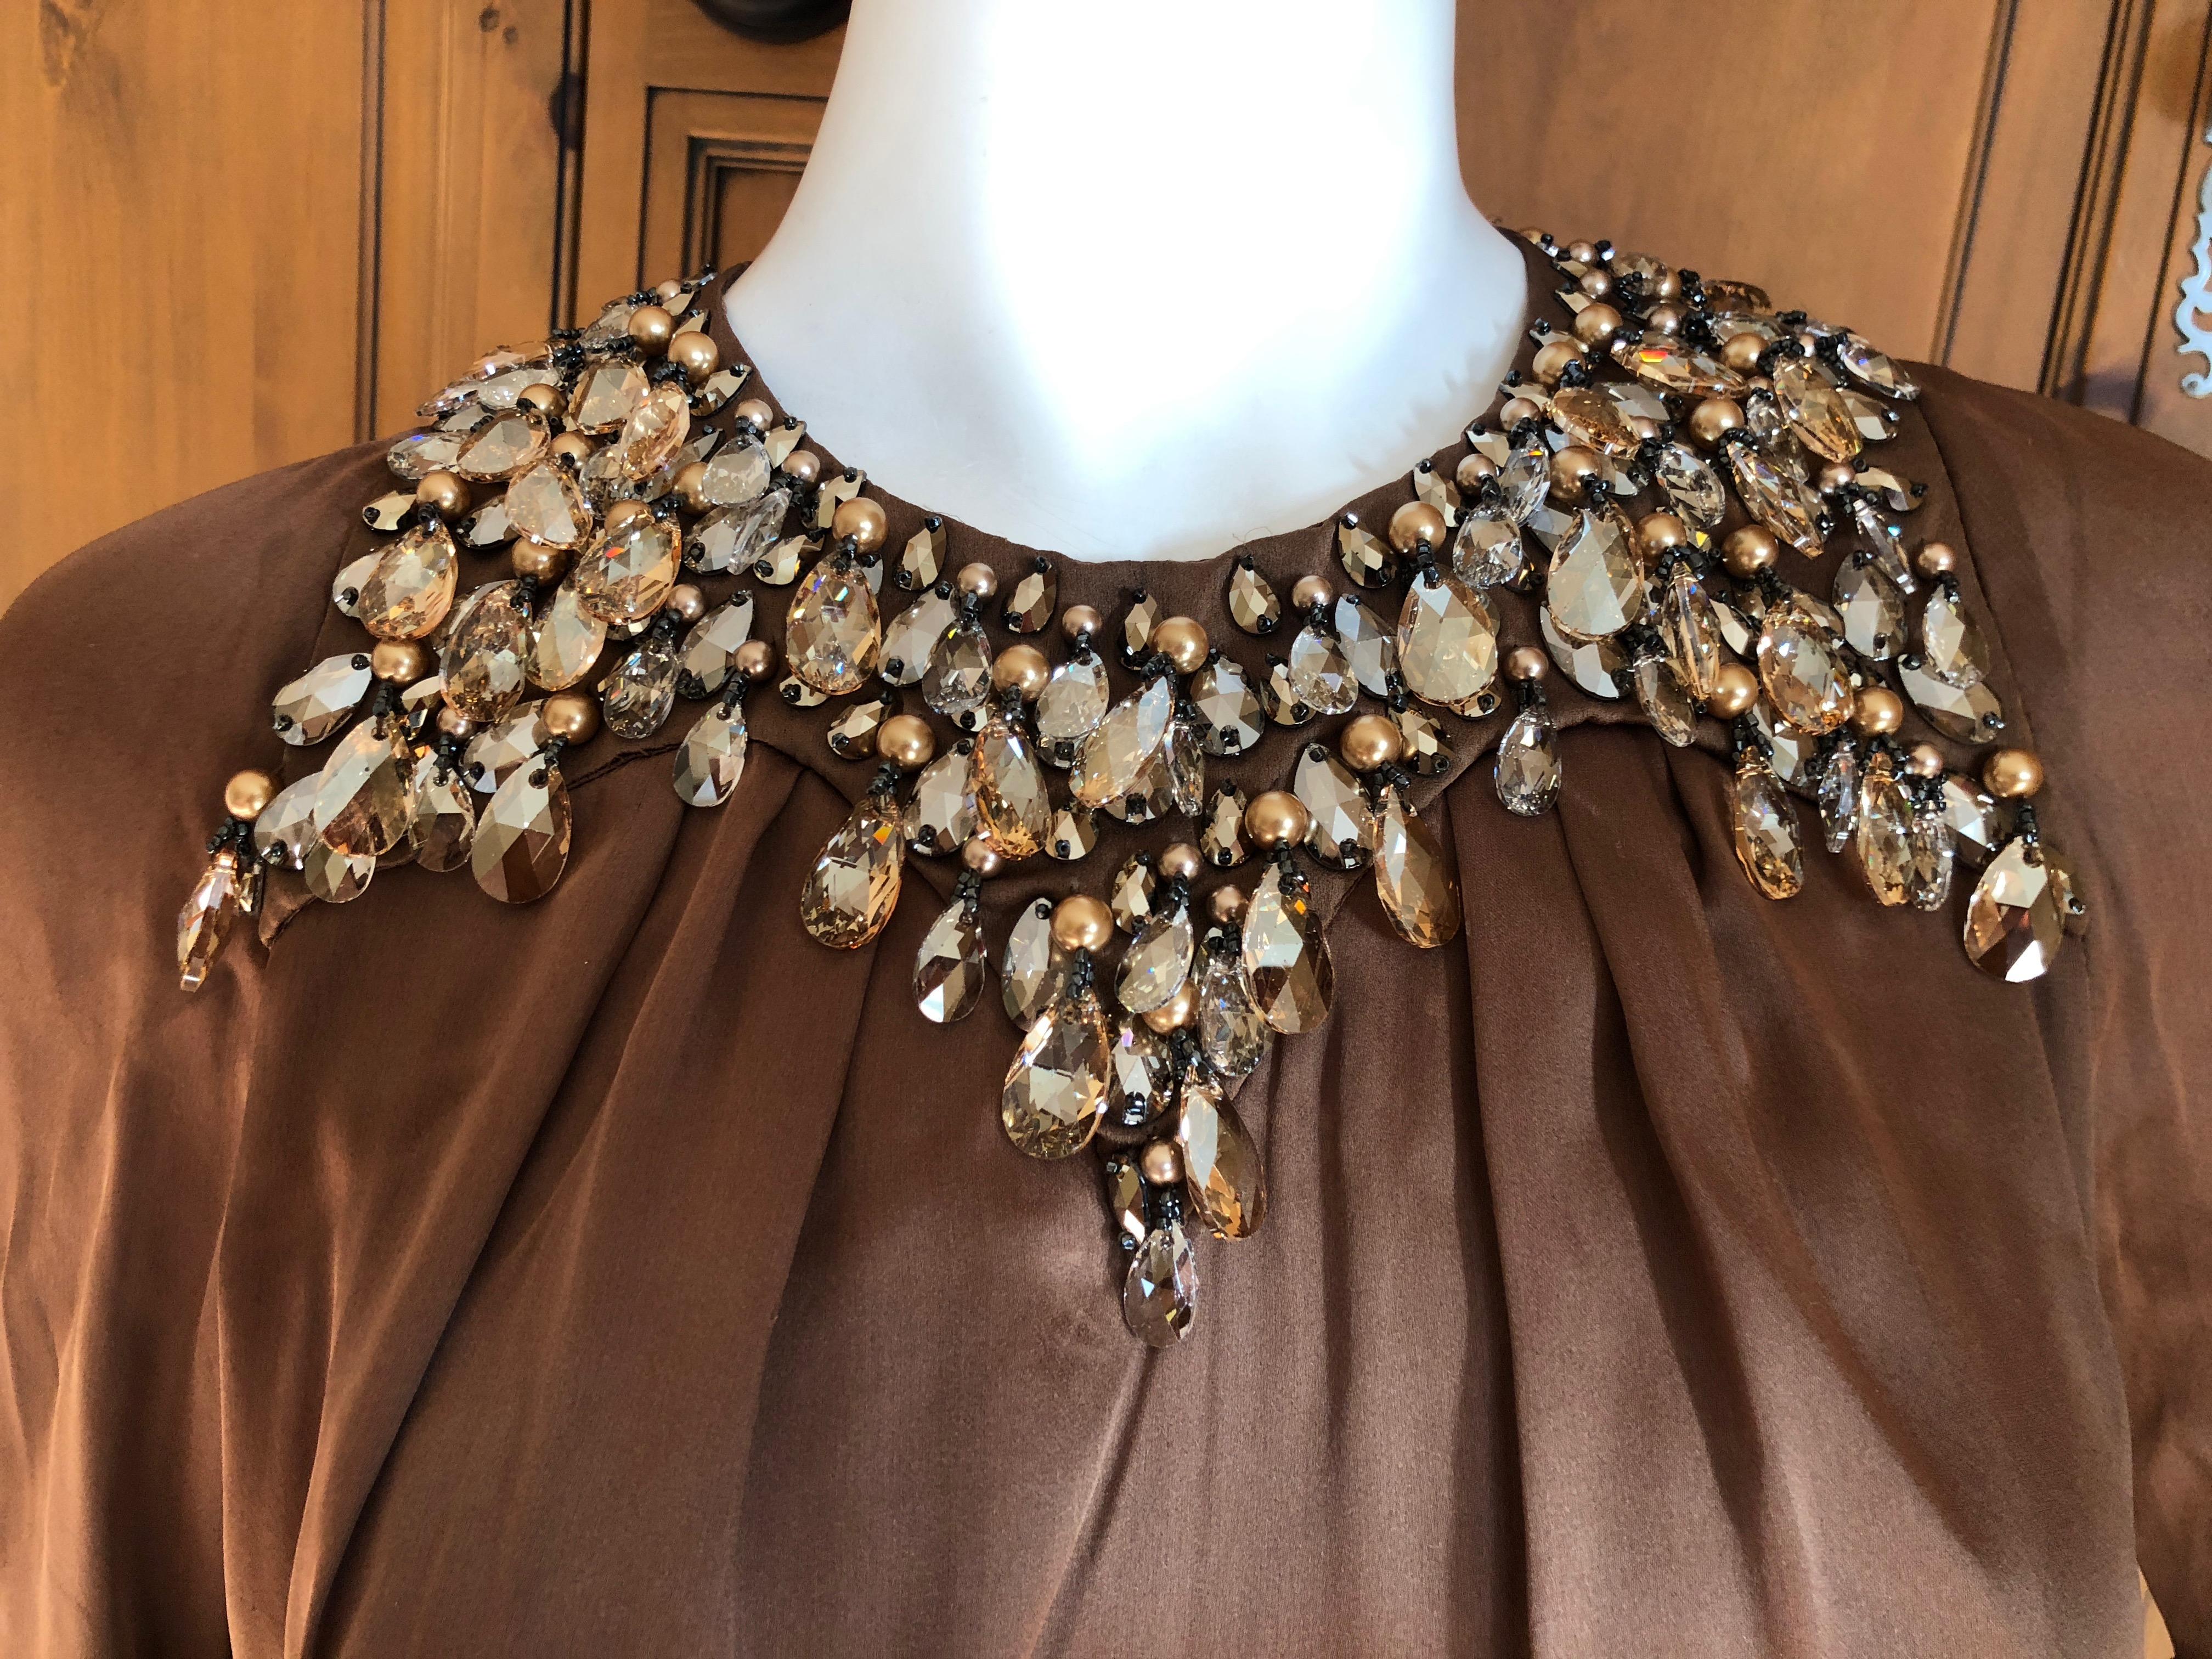 Azzaro Brown Silk Sash Tied Cocktail Dress with Gobsmacking Swarovski Crystal Collar
The 'necklace